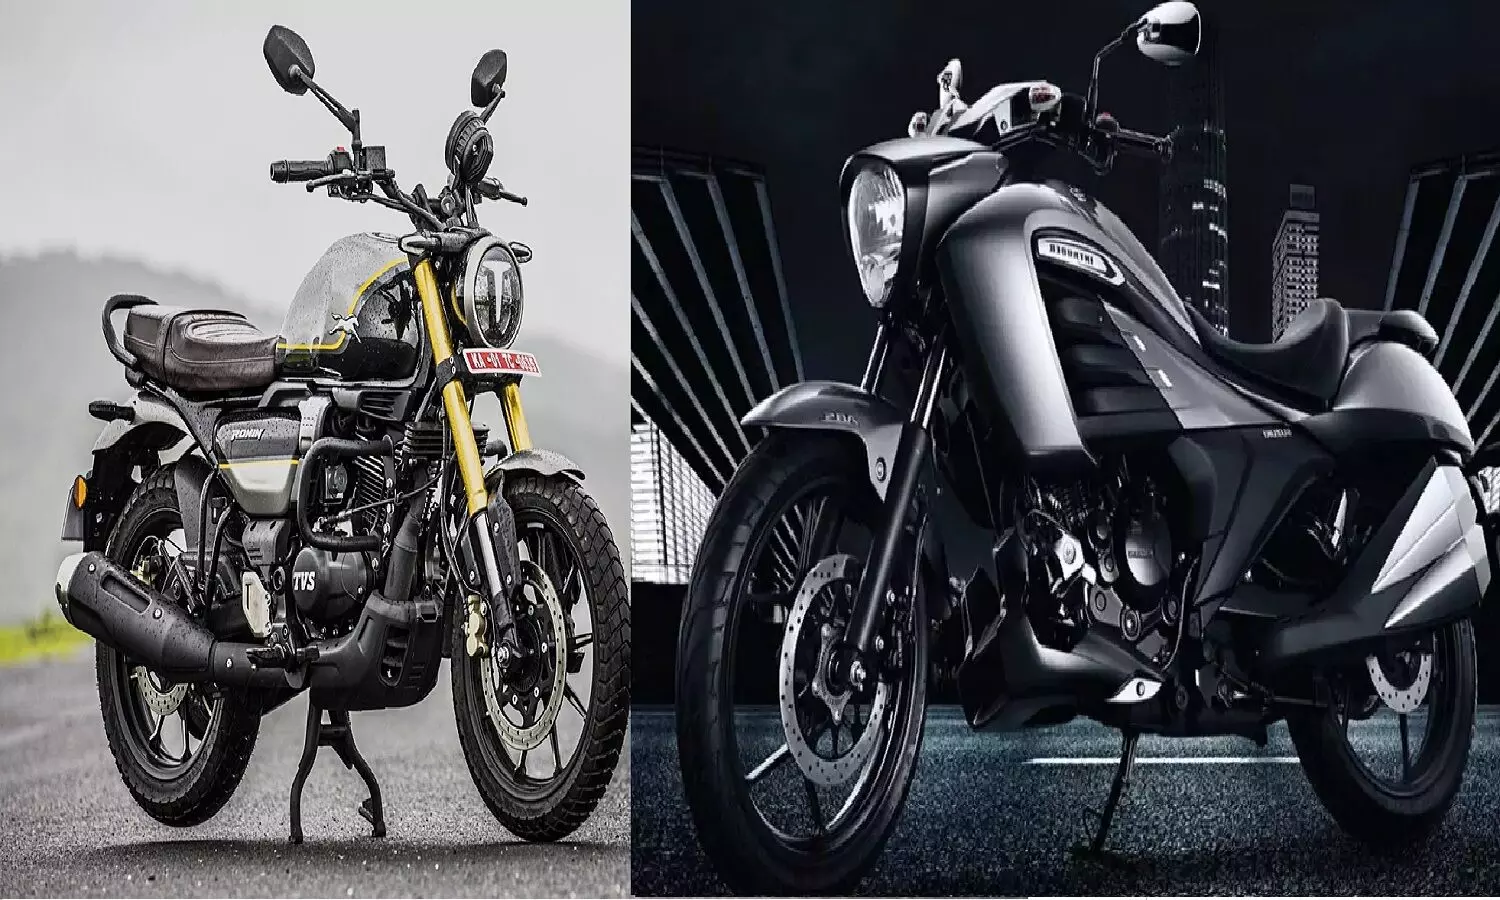 Suzuki Intruder Vs TVS Ronin In Hindi: कौन सी बाइक है बेस्ट